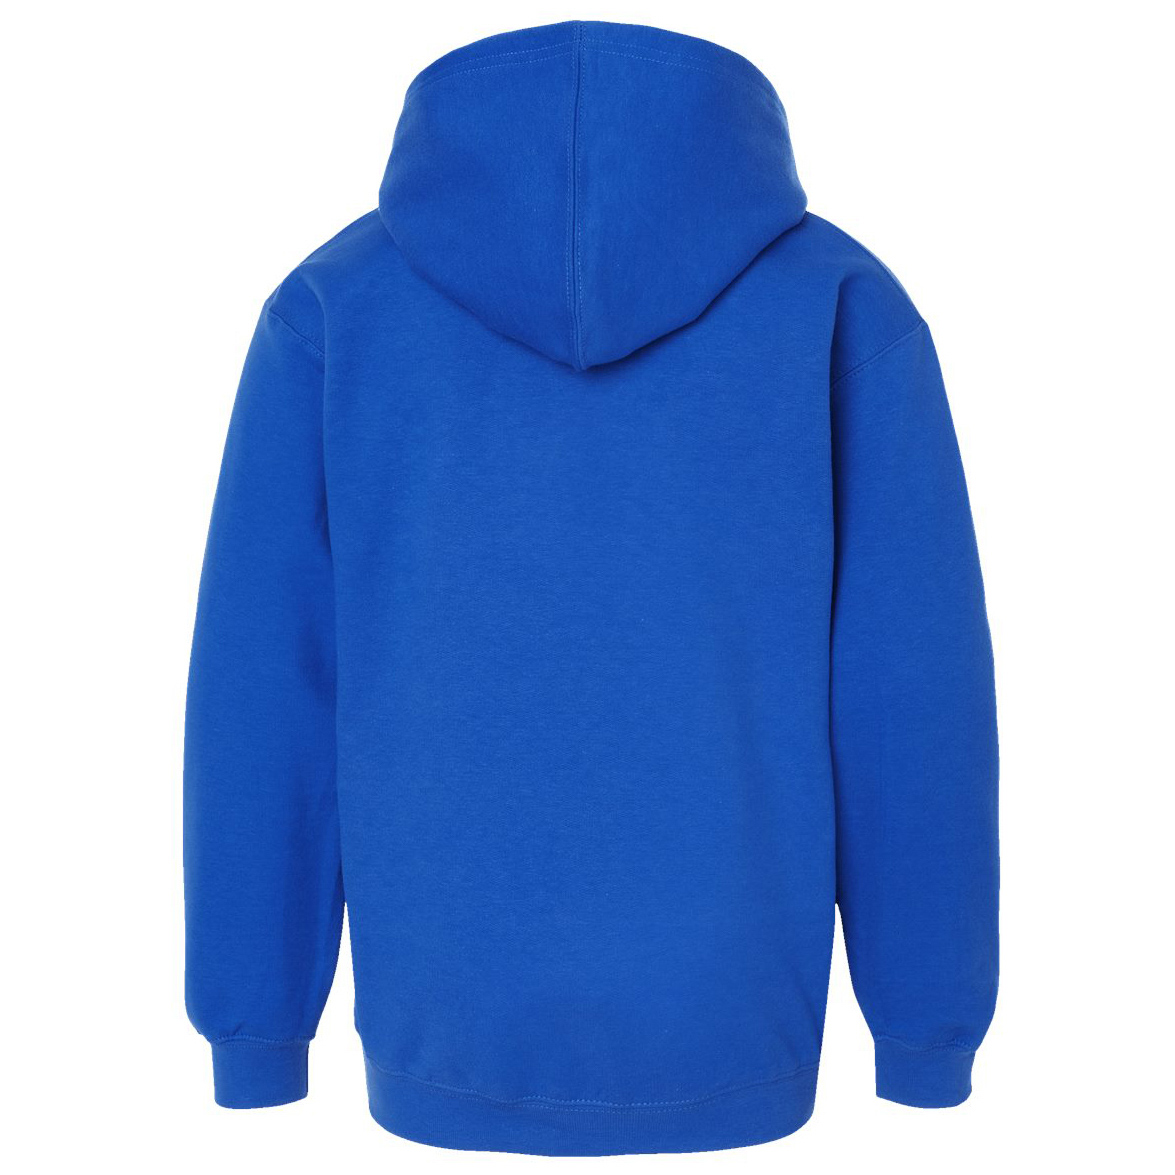 Tultex 320Y Youth Hooded Sweatshirt - Royal | Full Source